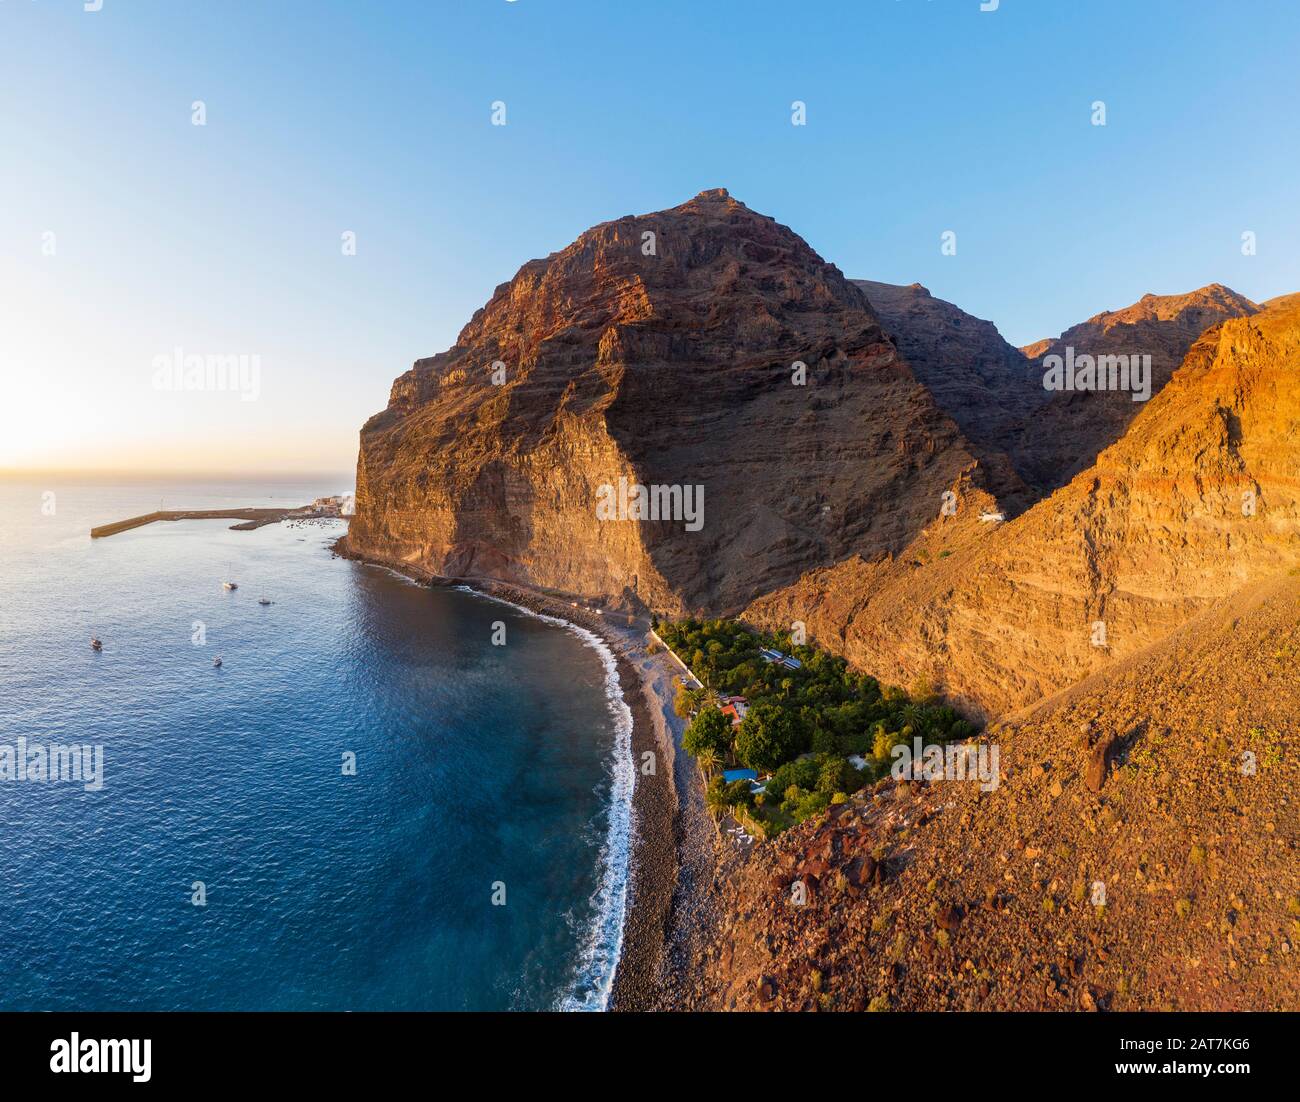 Port of Vueltas, Mount Tequergenche, Beach Playa de Argaga, Argaga Gorge, Valle Gran Rey, Aerial view, La Gomera, Canary Islands, Spain Stock Photo